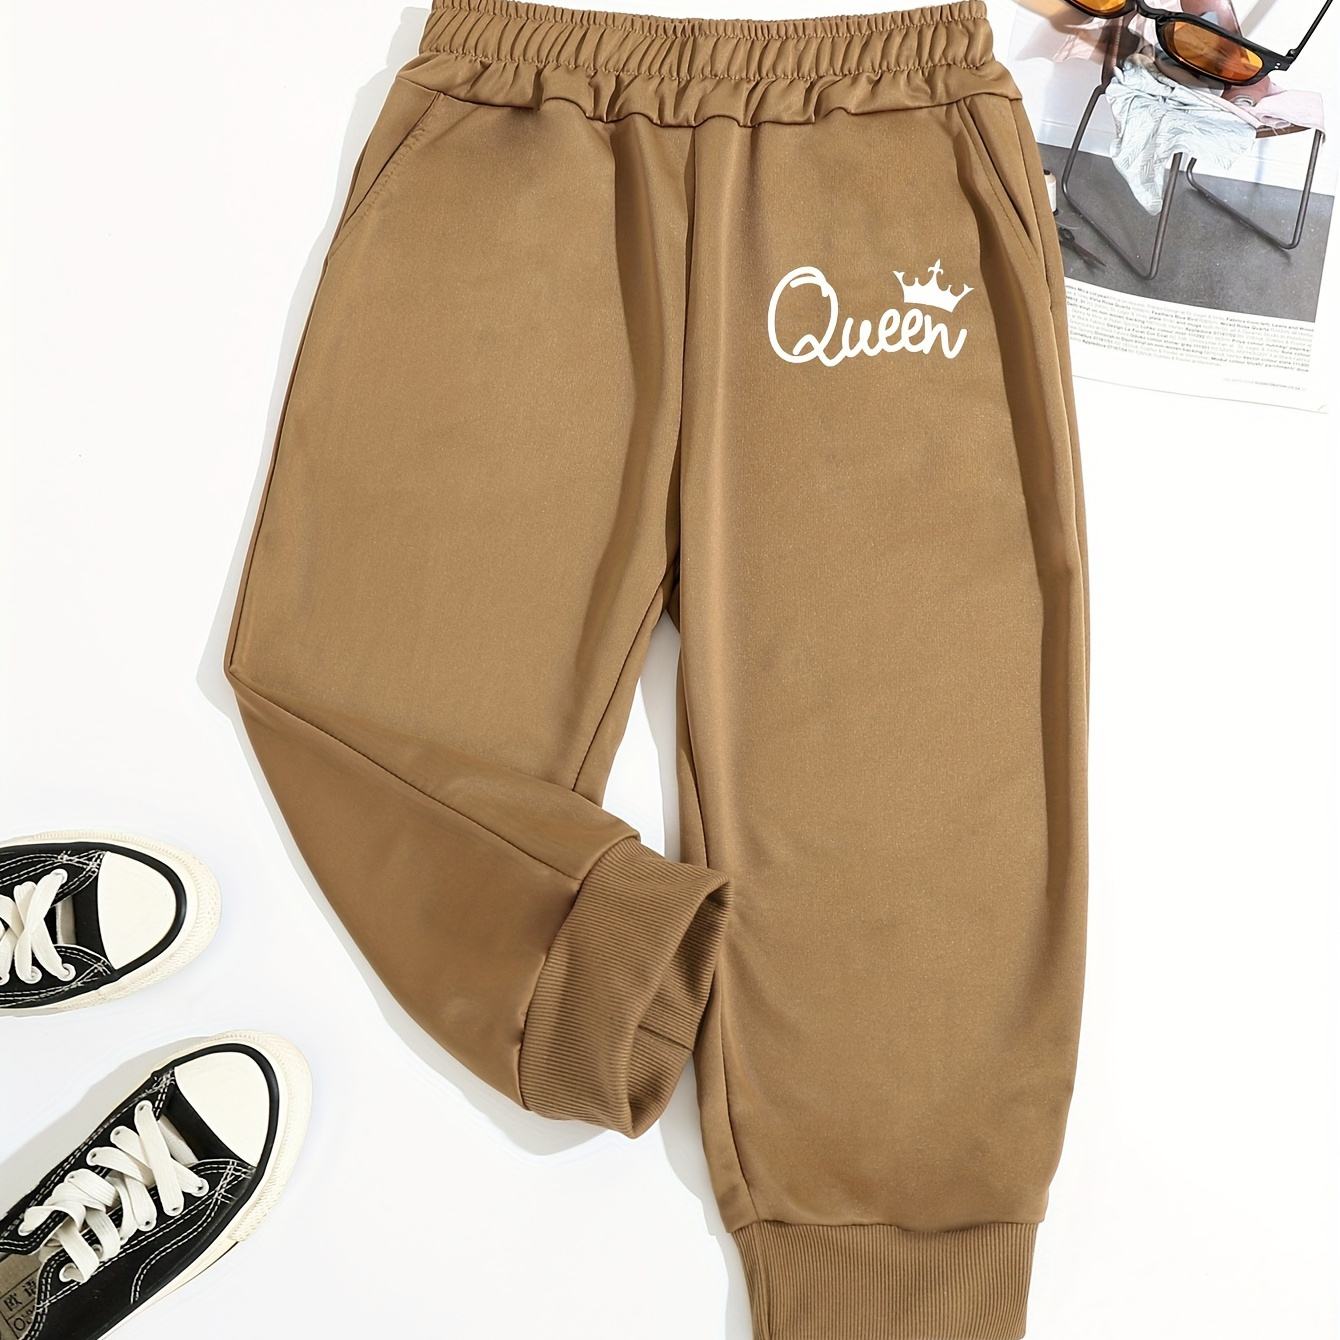 

Queen Print Capris Pants, Casual Elastic Waist Pocket Pants For Summer, Women's Clothing